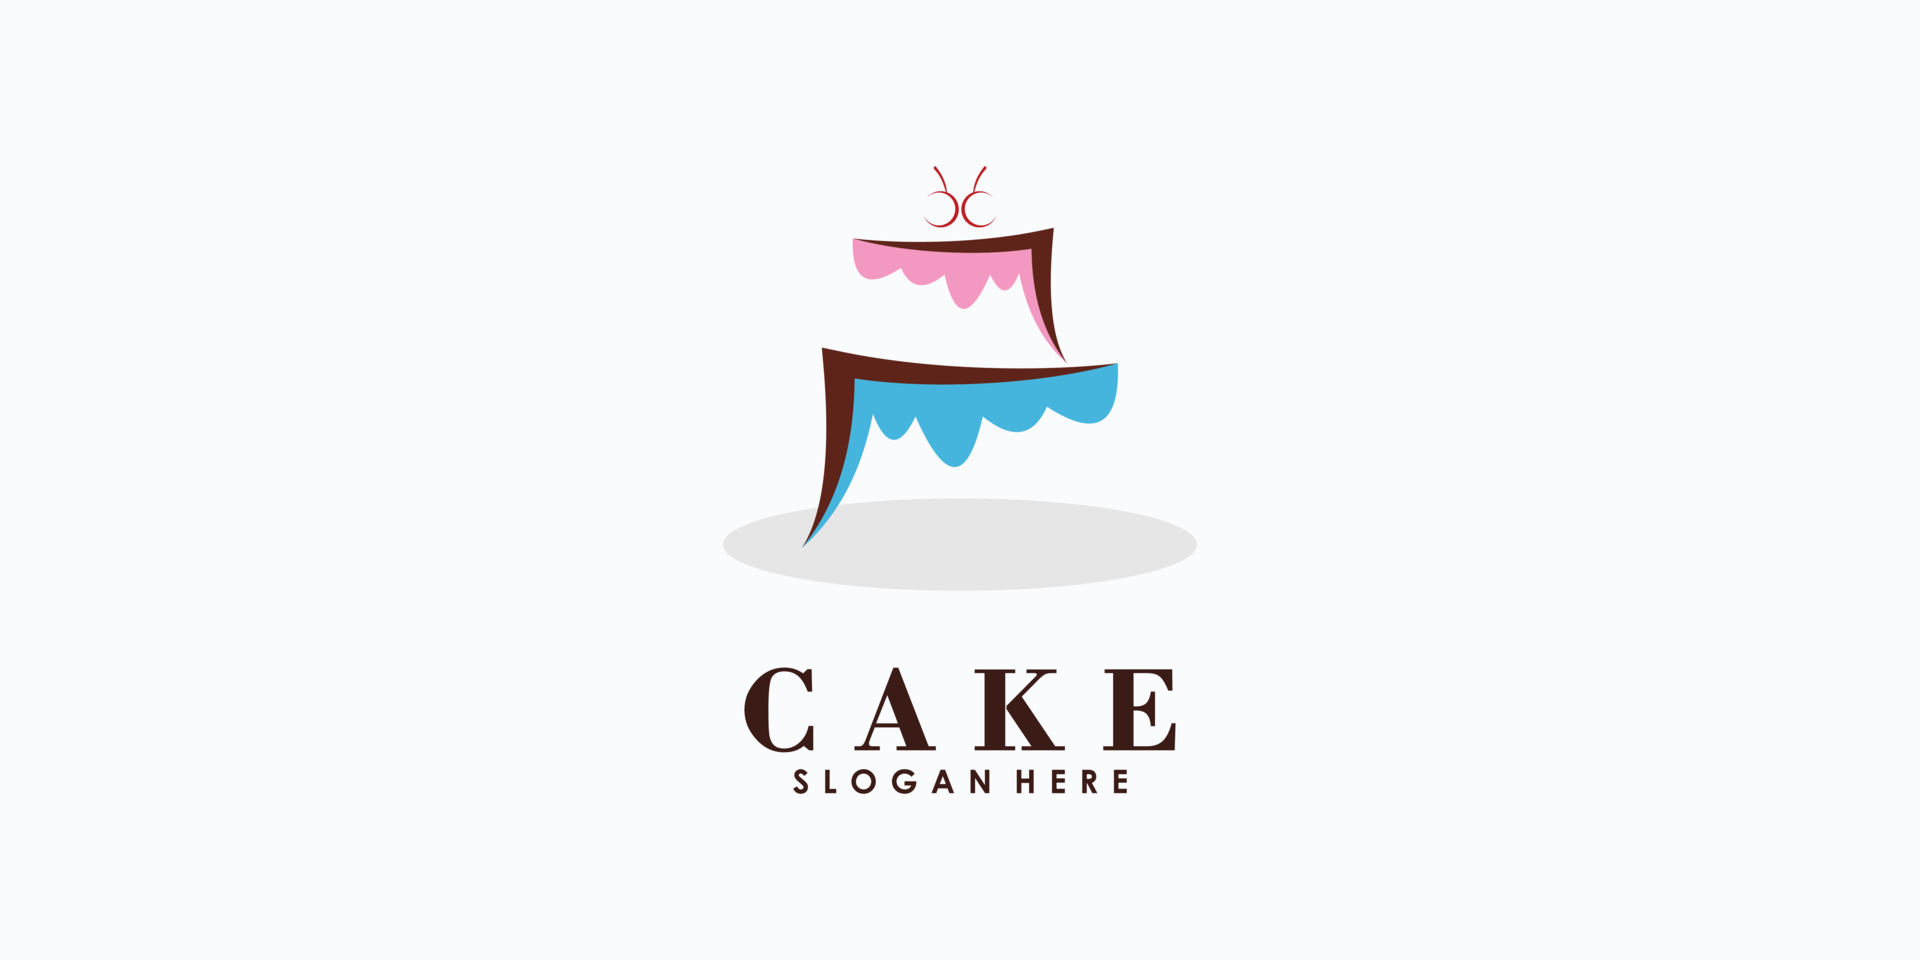 34,458 Cake Shop Logo Images, Stock Photos, 3D objects, & Vectors |  Shutterstock